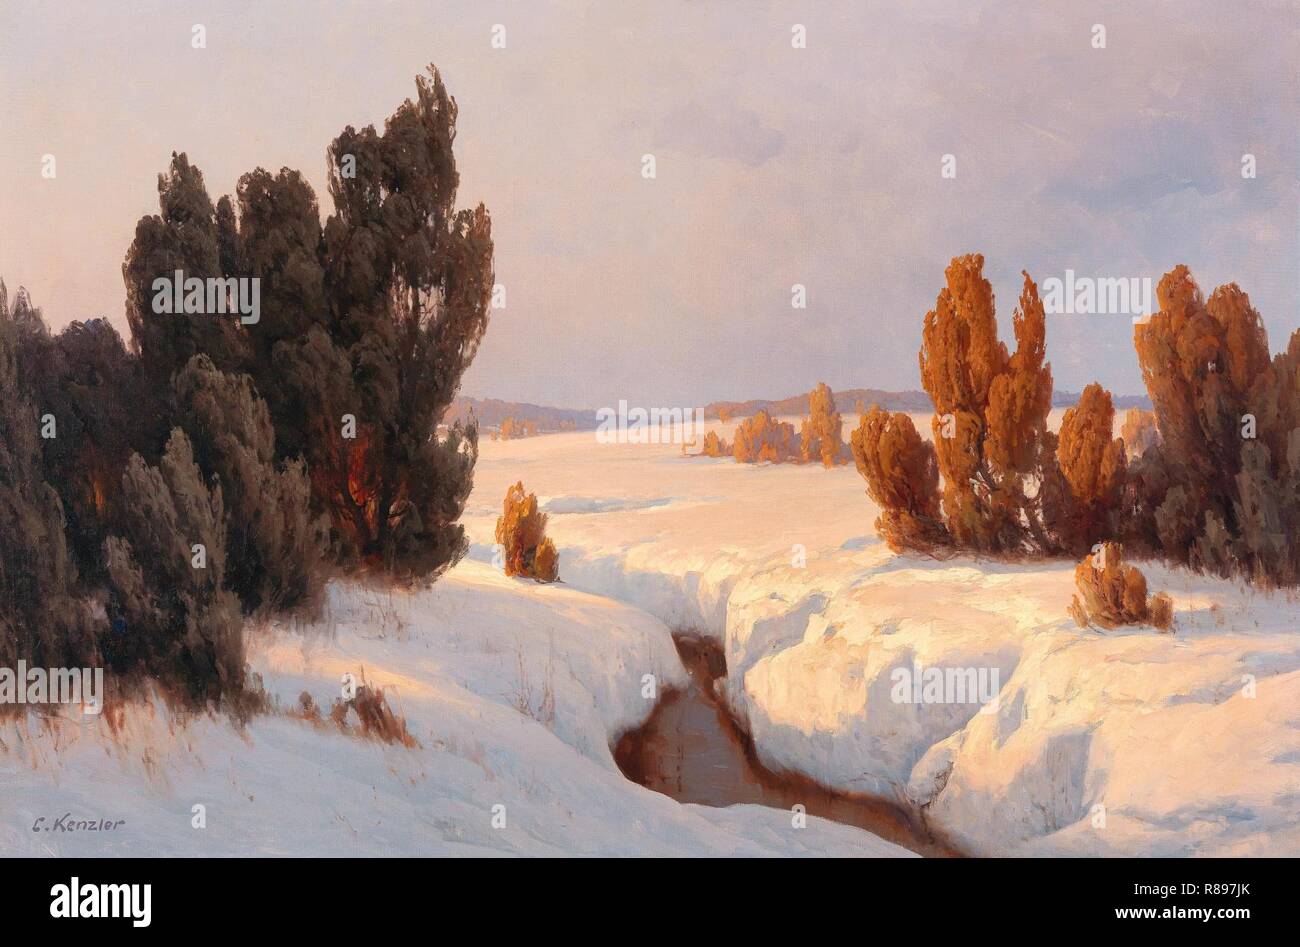 Carl Kenzler - Winter Landscape in the Sun. Stock Photo